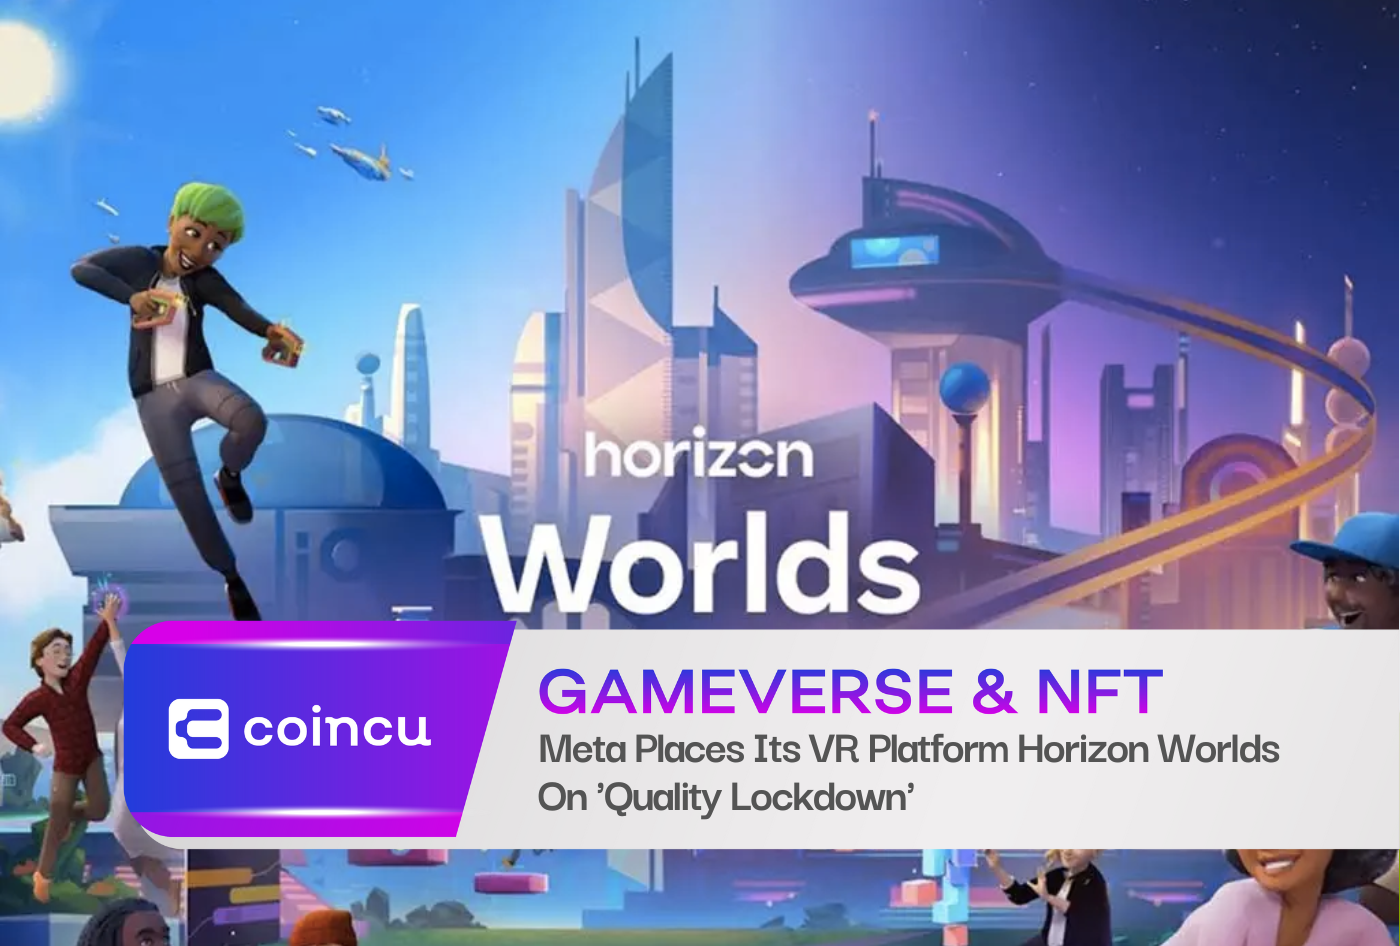 Meta Places Its VR Platform Horizon Worlds On 'Quality Lockdown'